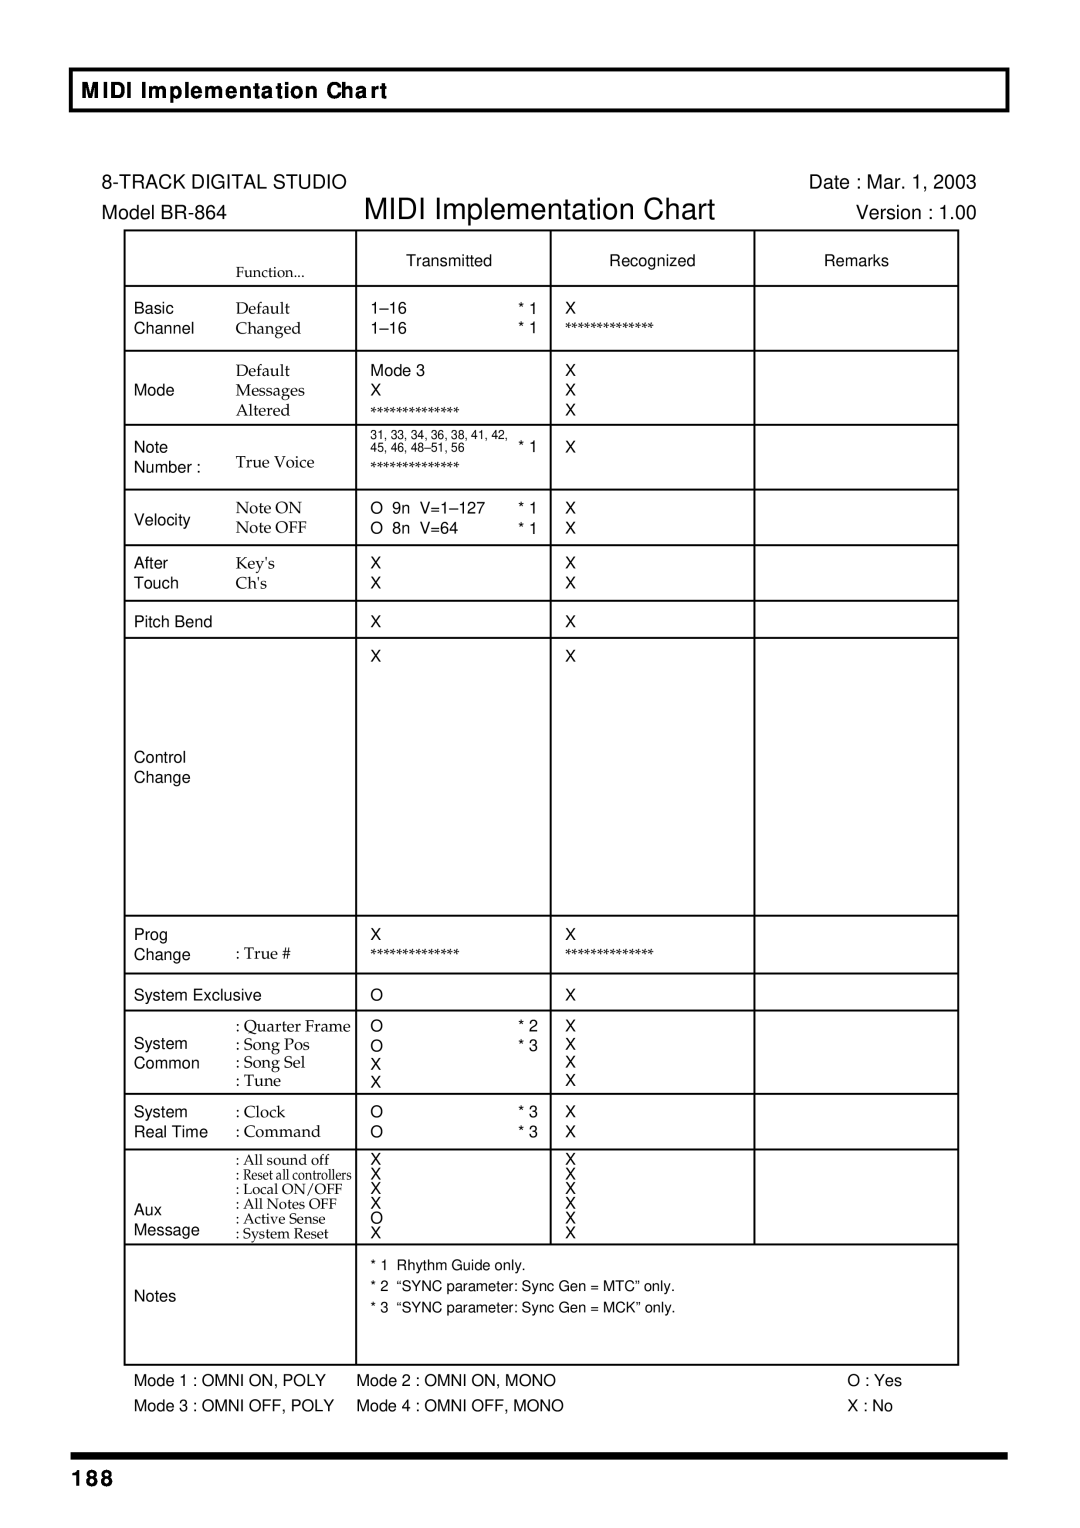 Roland owner manual MIDI Implementation Chart, Trackdigital Studio, Date : Mar. 1, Model BR-864, Version 